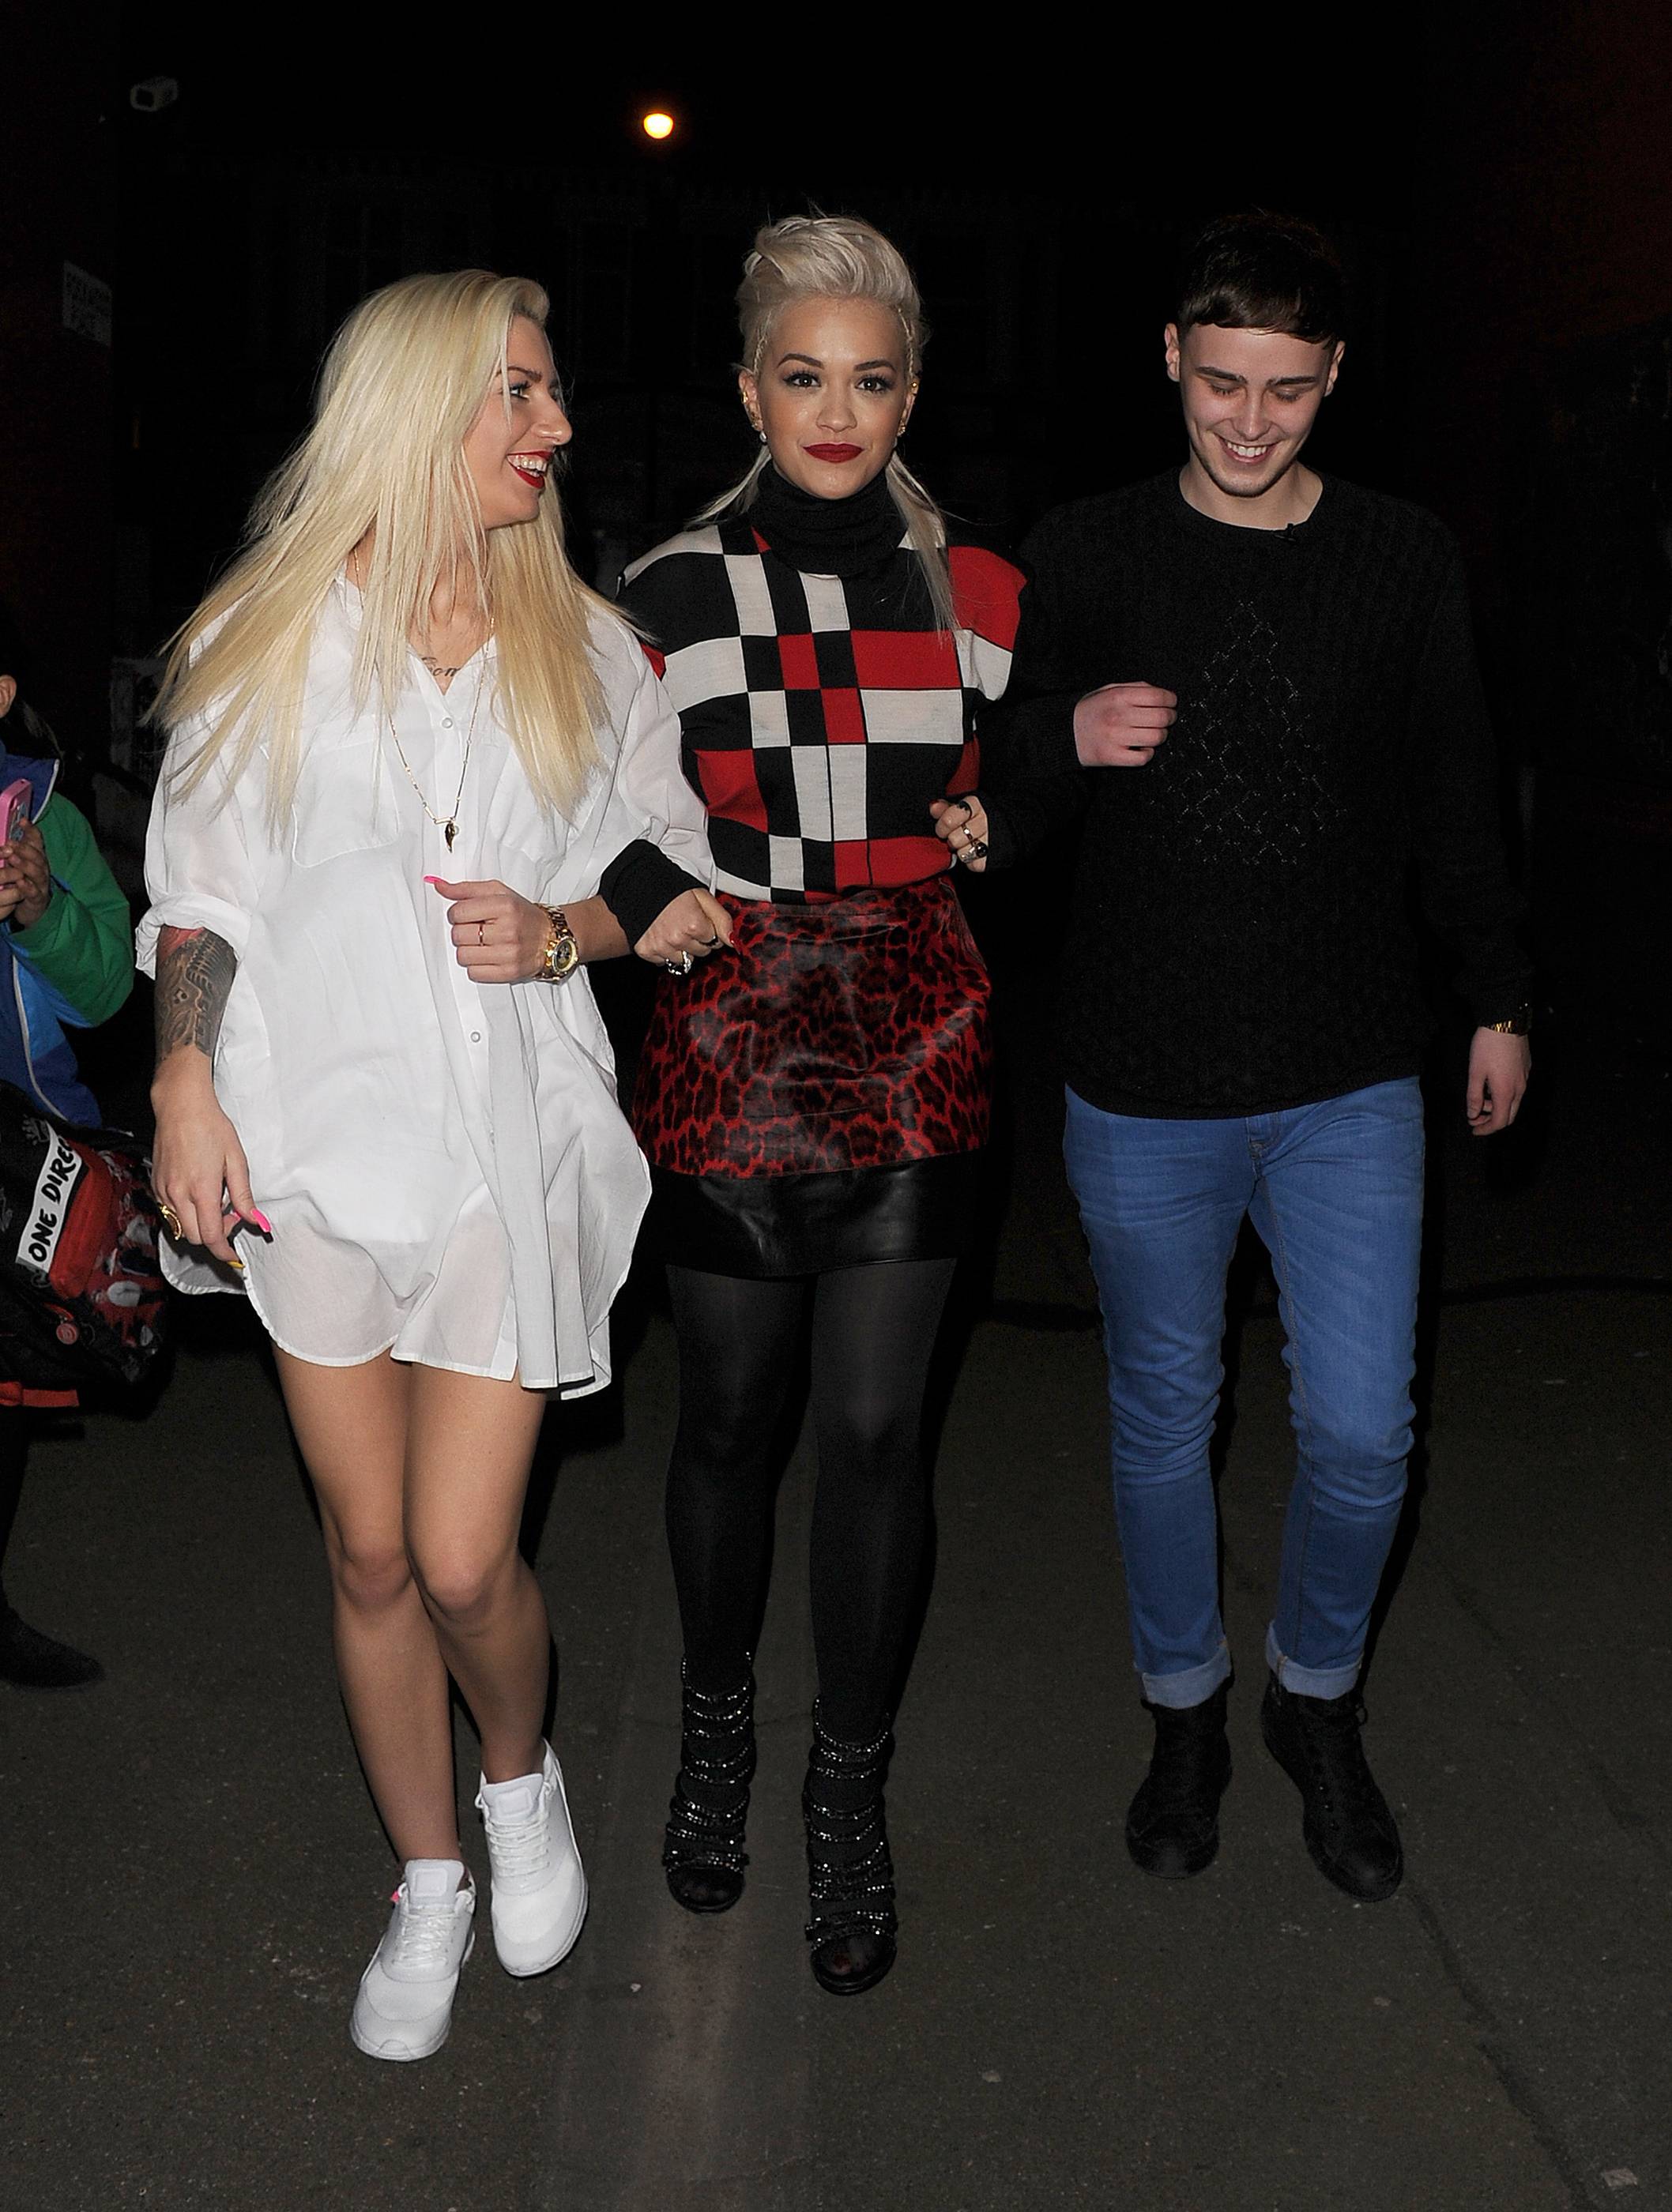 Rita Ora arriving at Charli XCX’s gig